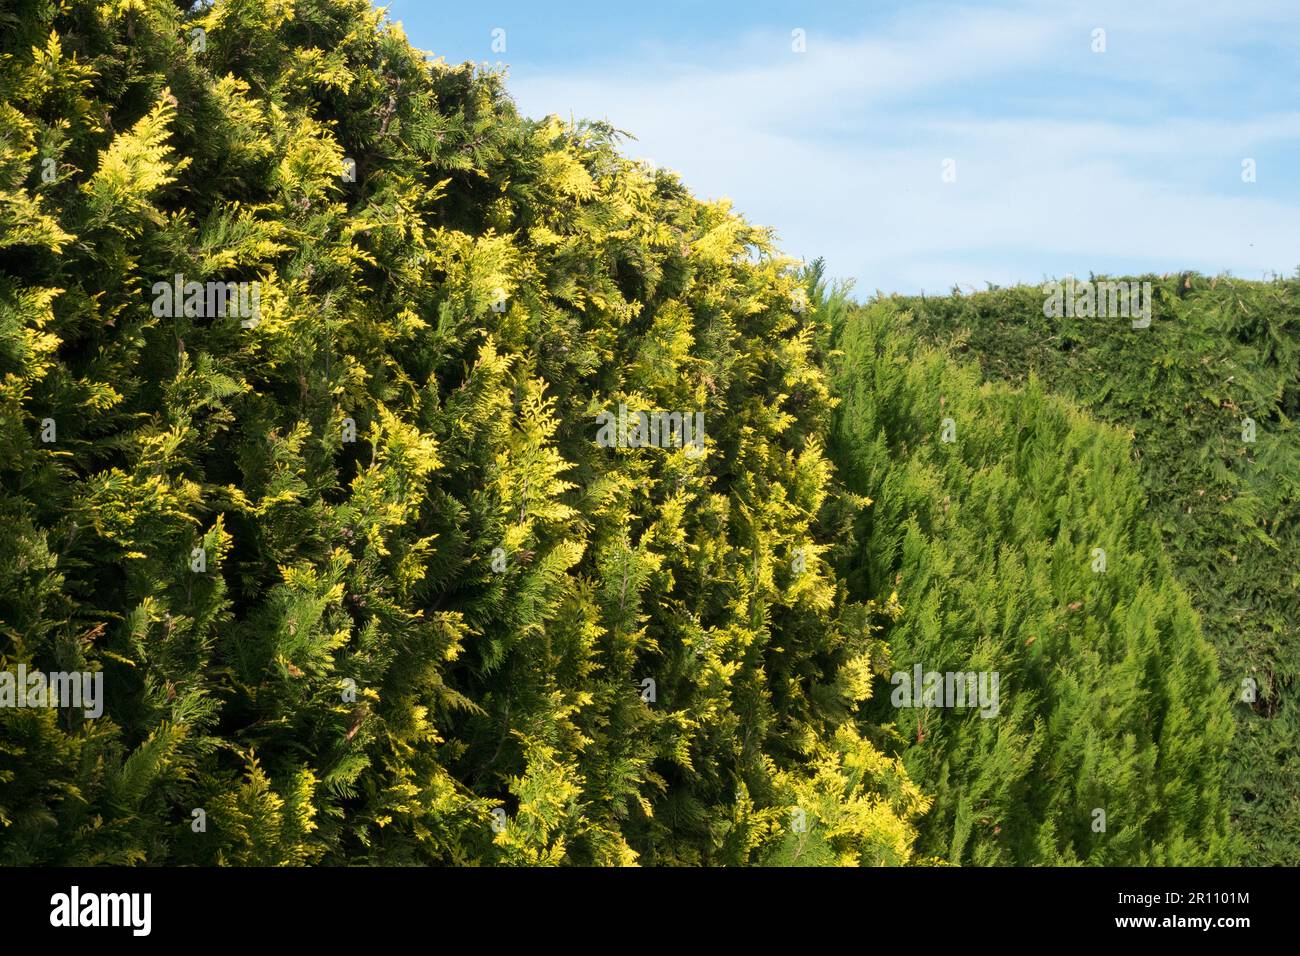 Lawson Cypress Hedge Chamaecyparis 'Ivonne' Chamaecyparis lawsoniana Stock Photo